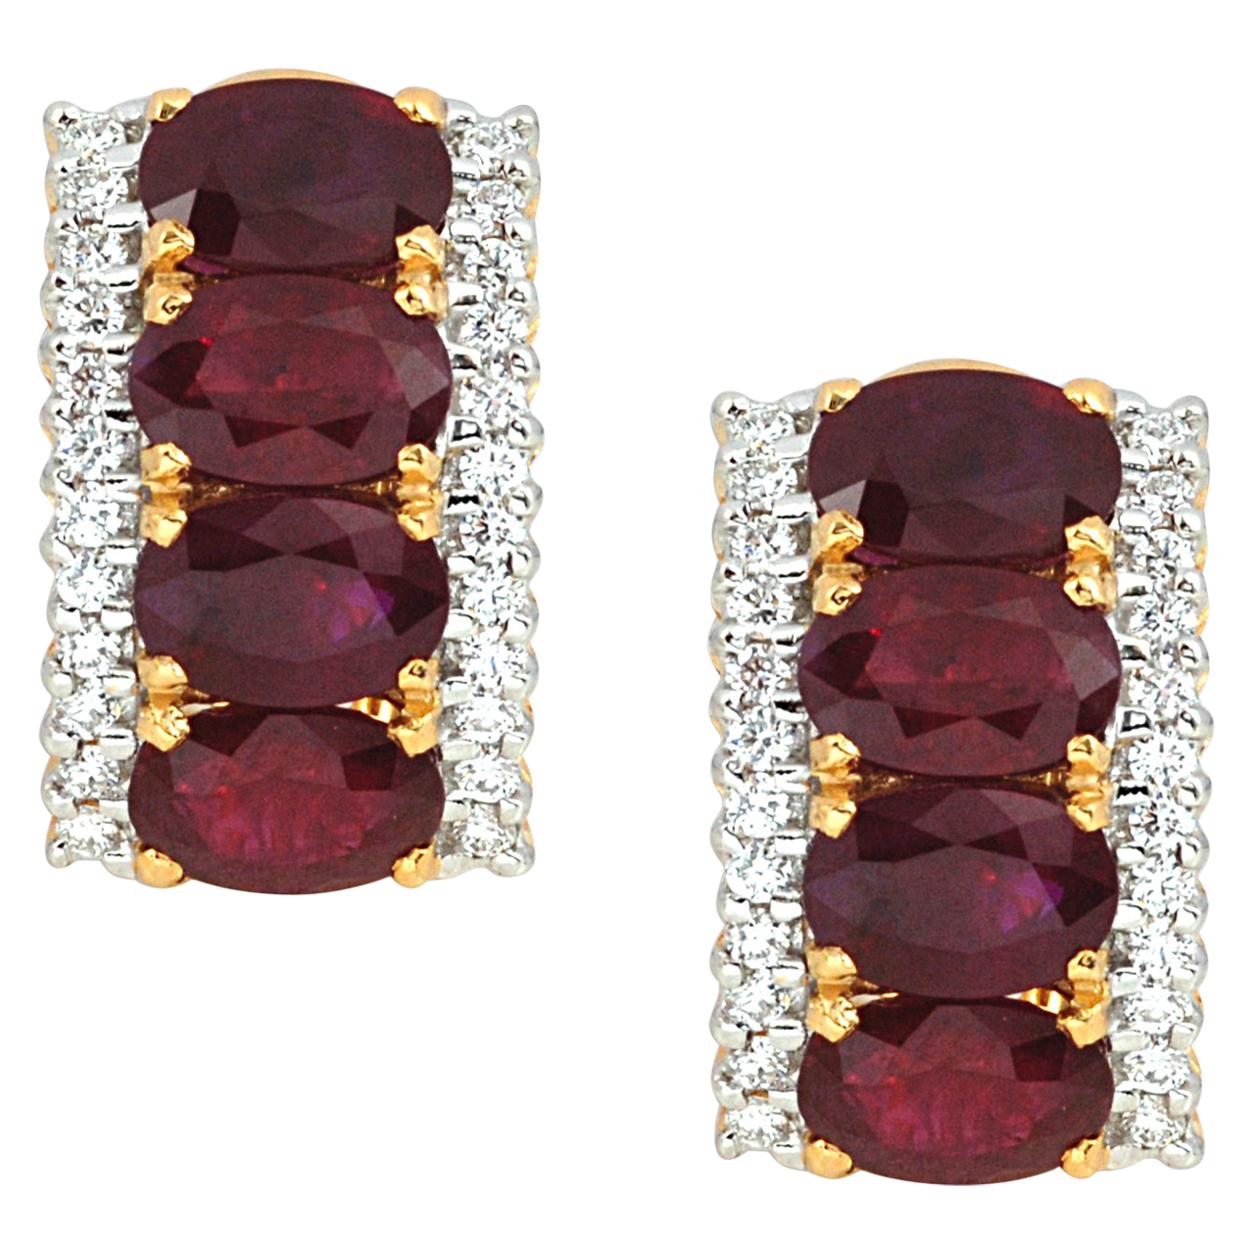 Ruby 8.22 Carat with Diamond 0.56 Carat Earrings set in 18 Karat Gold Settings